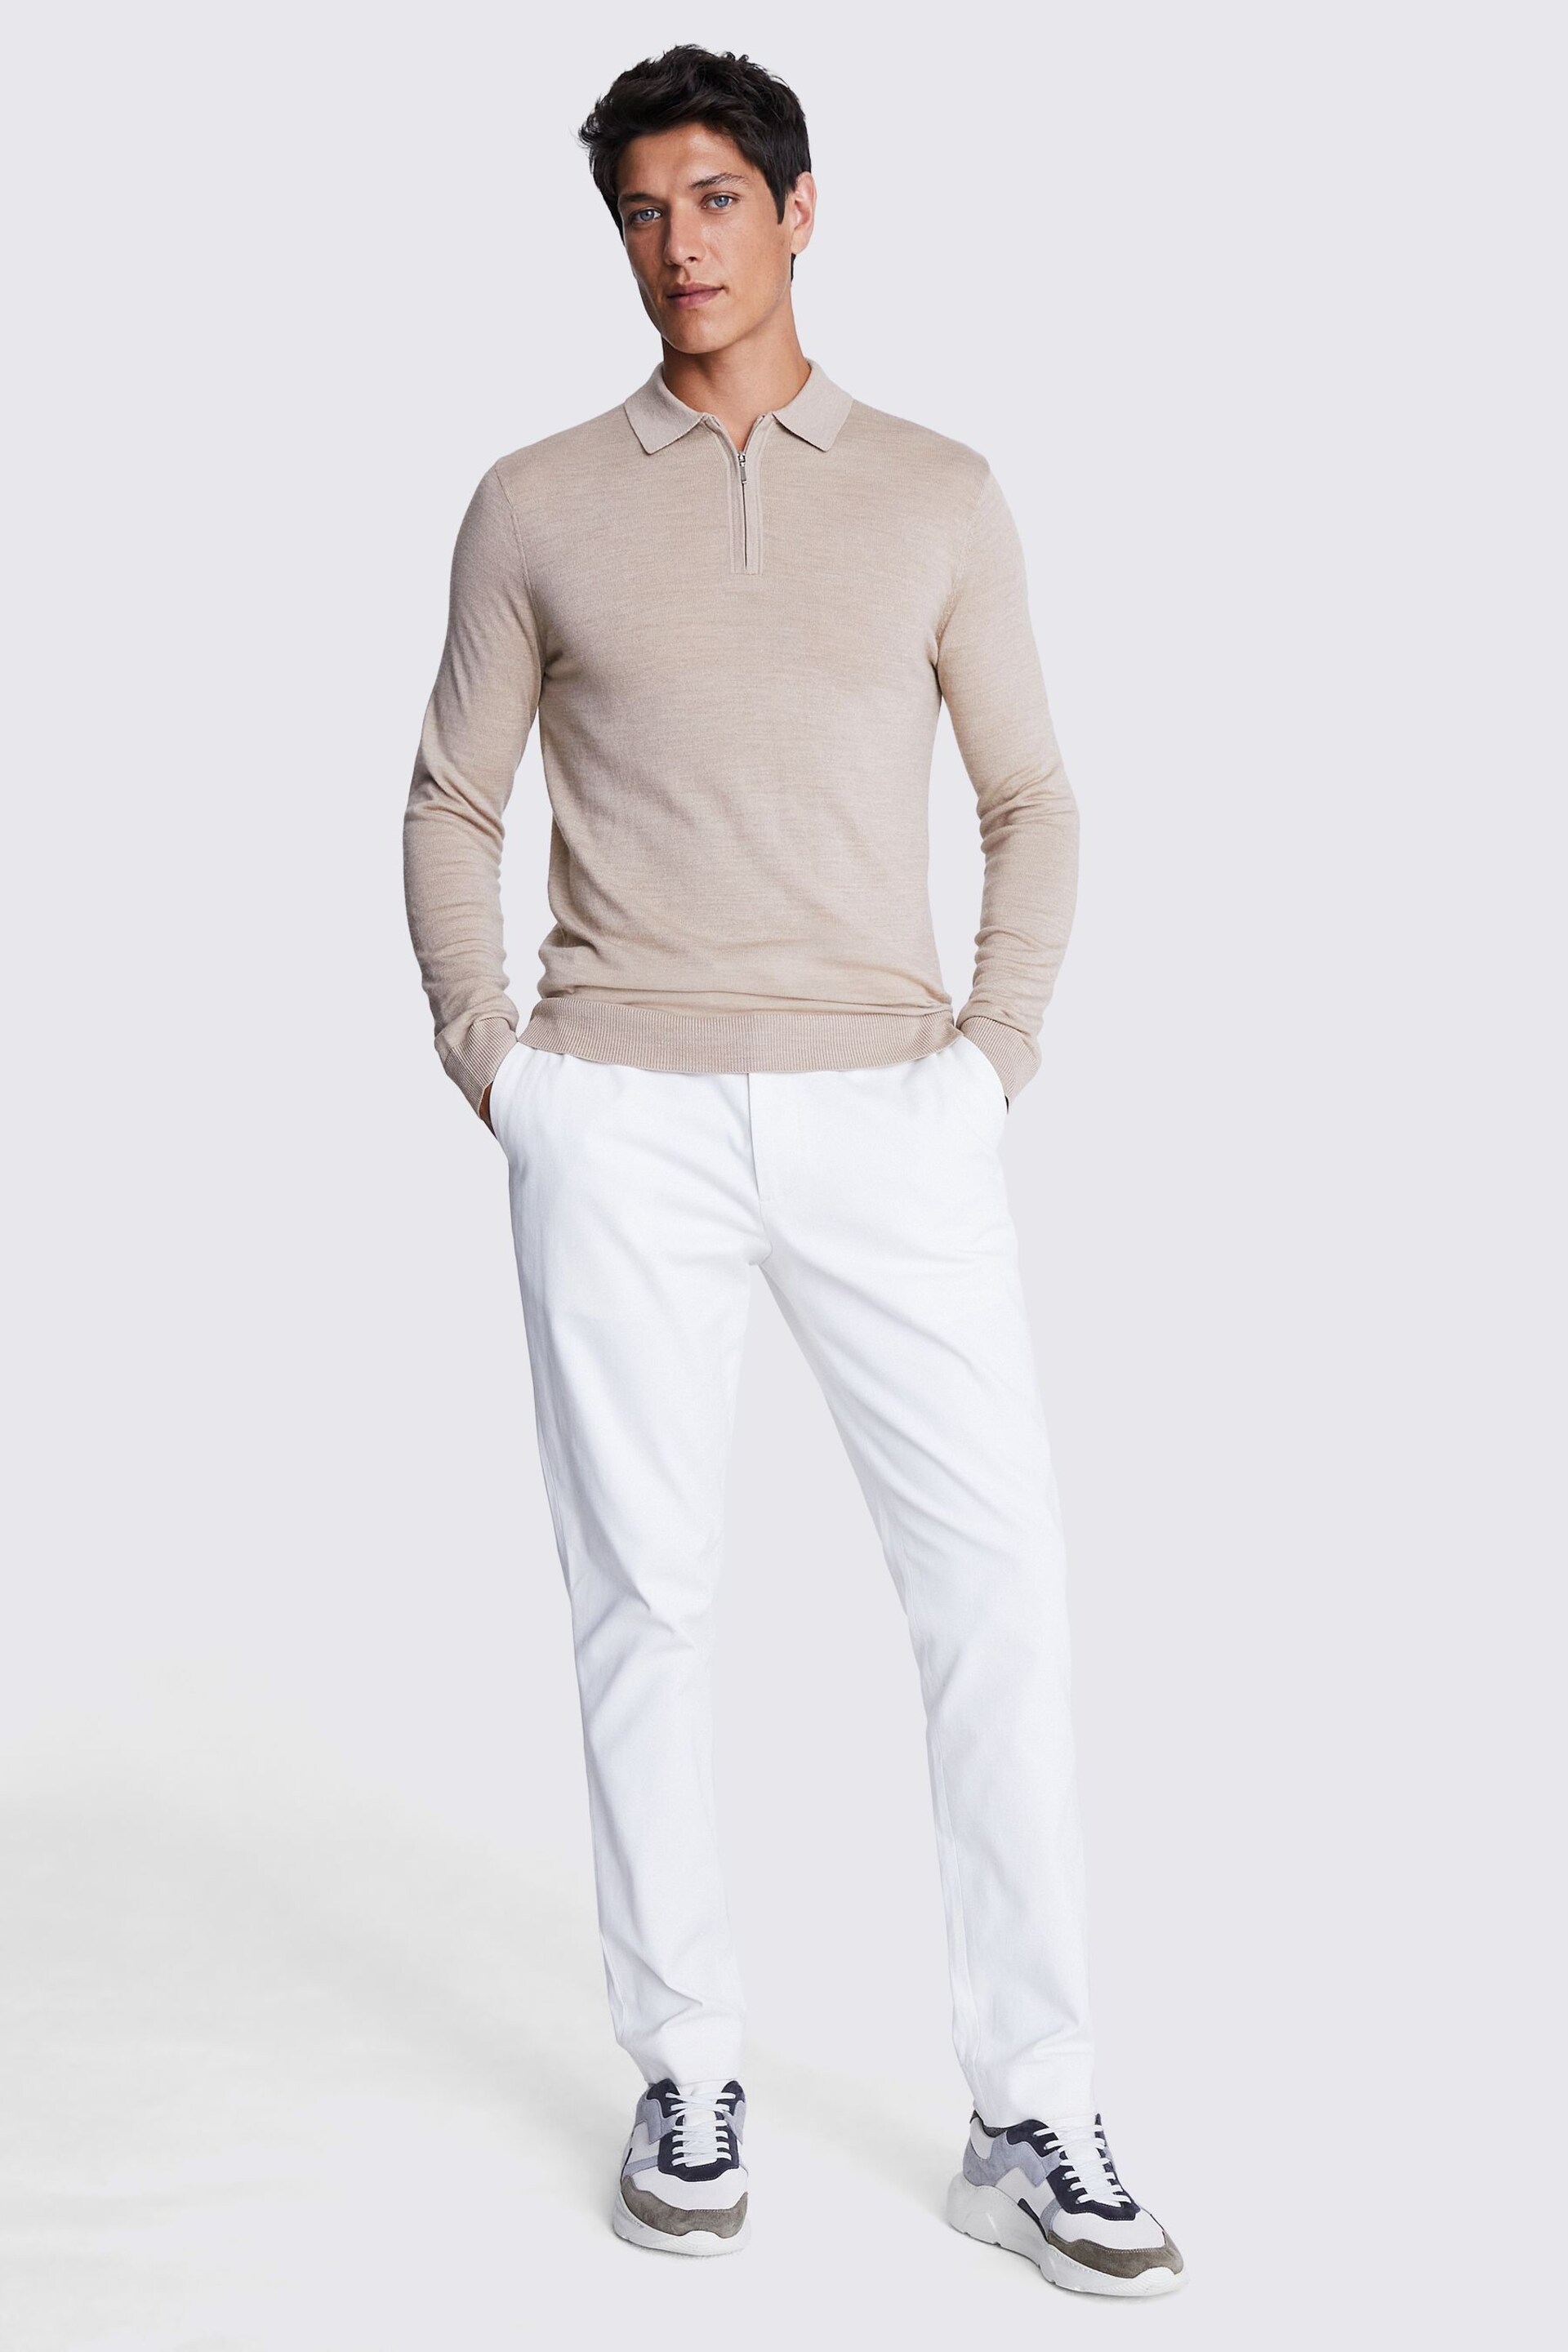 MOSS Natural Merino Blend Zip Polo Shirt - Image 2 of 5